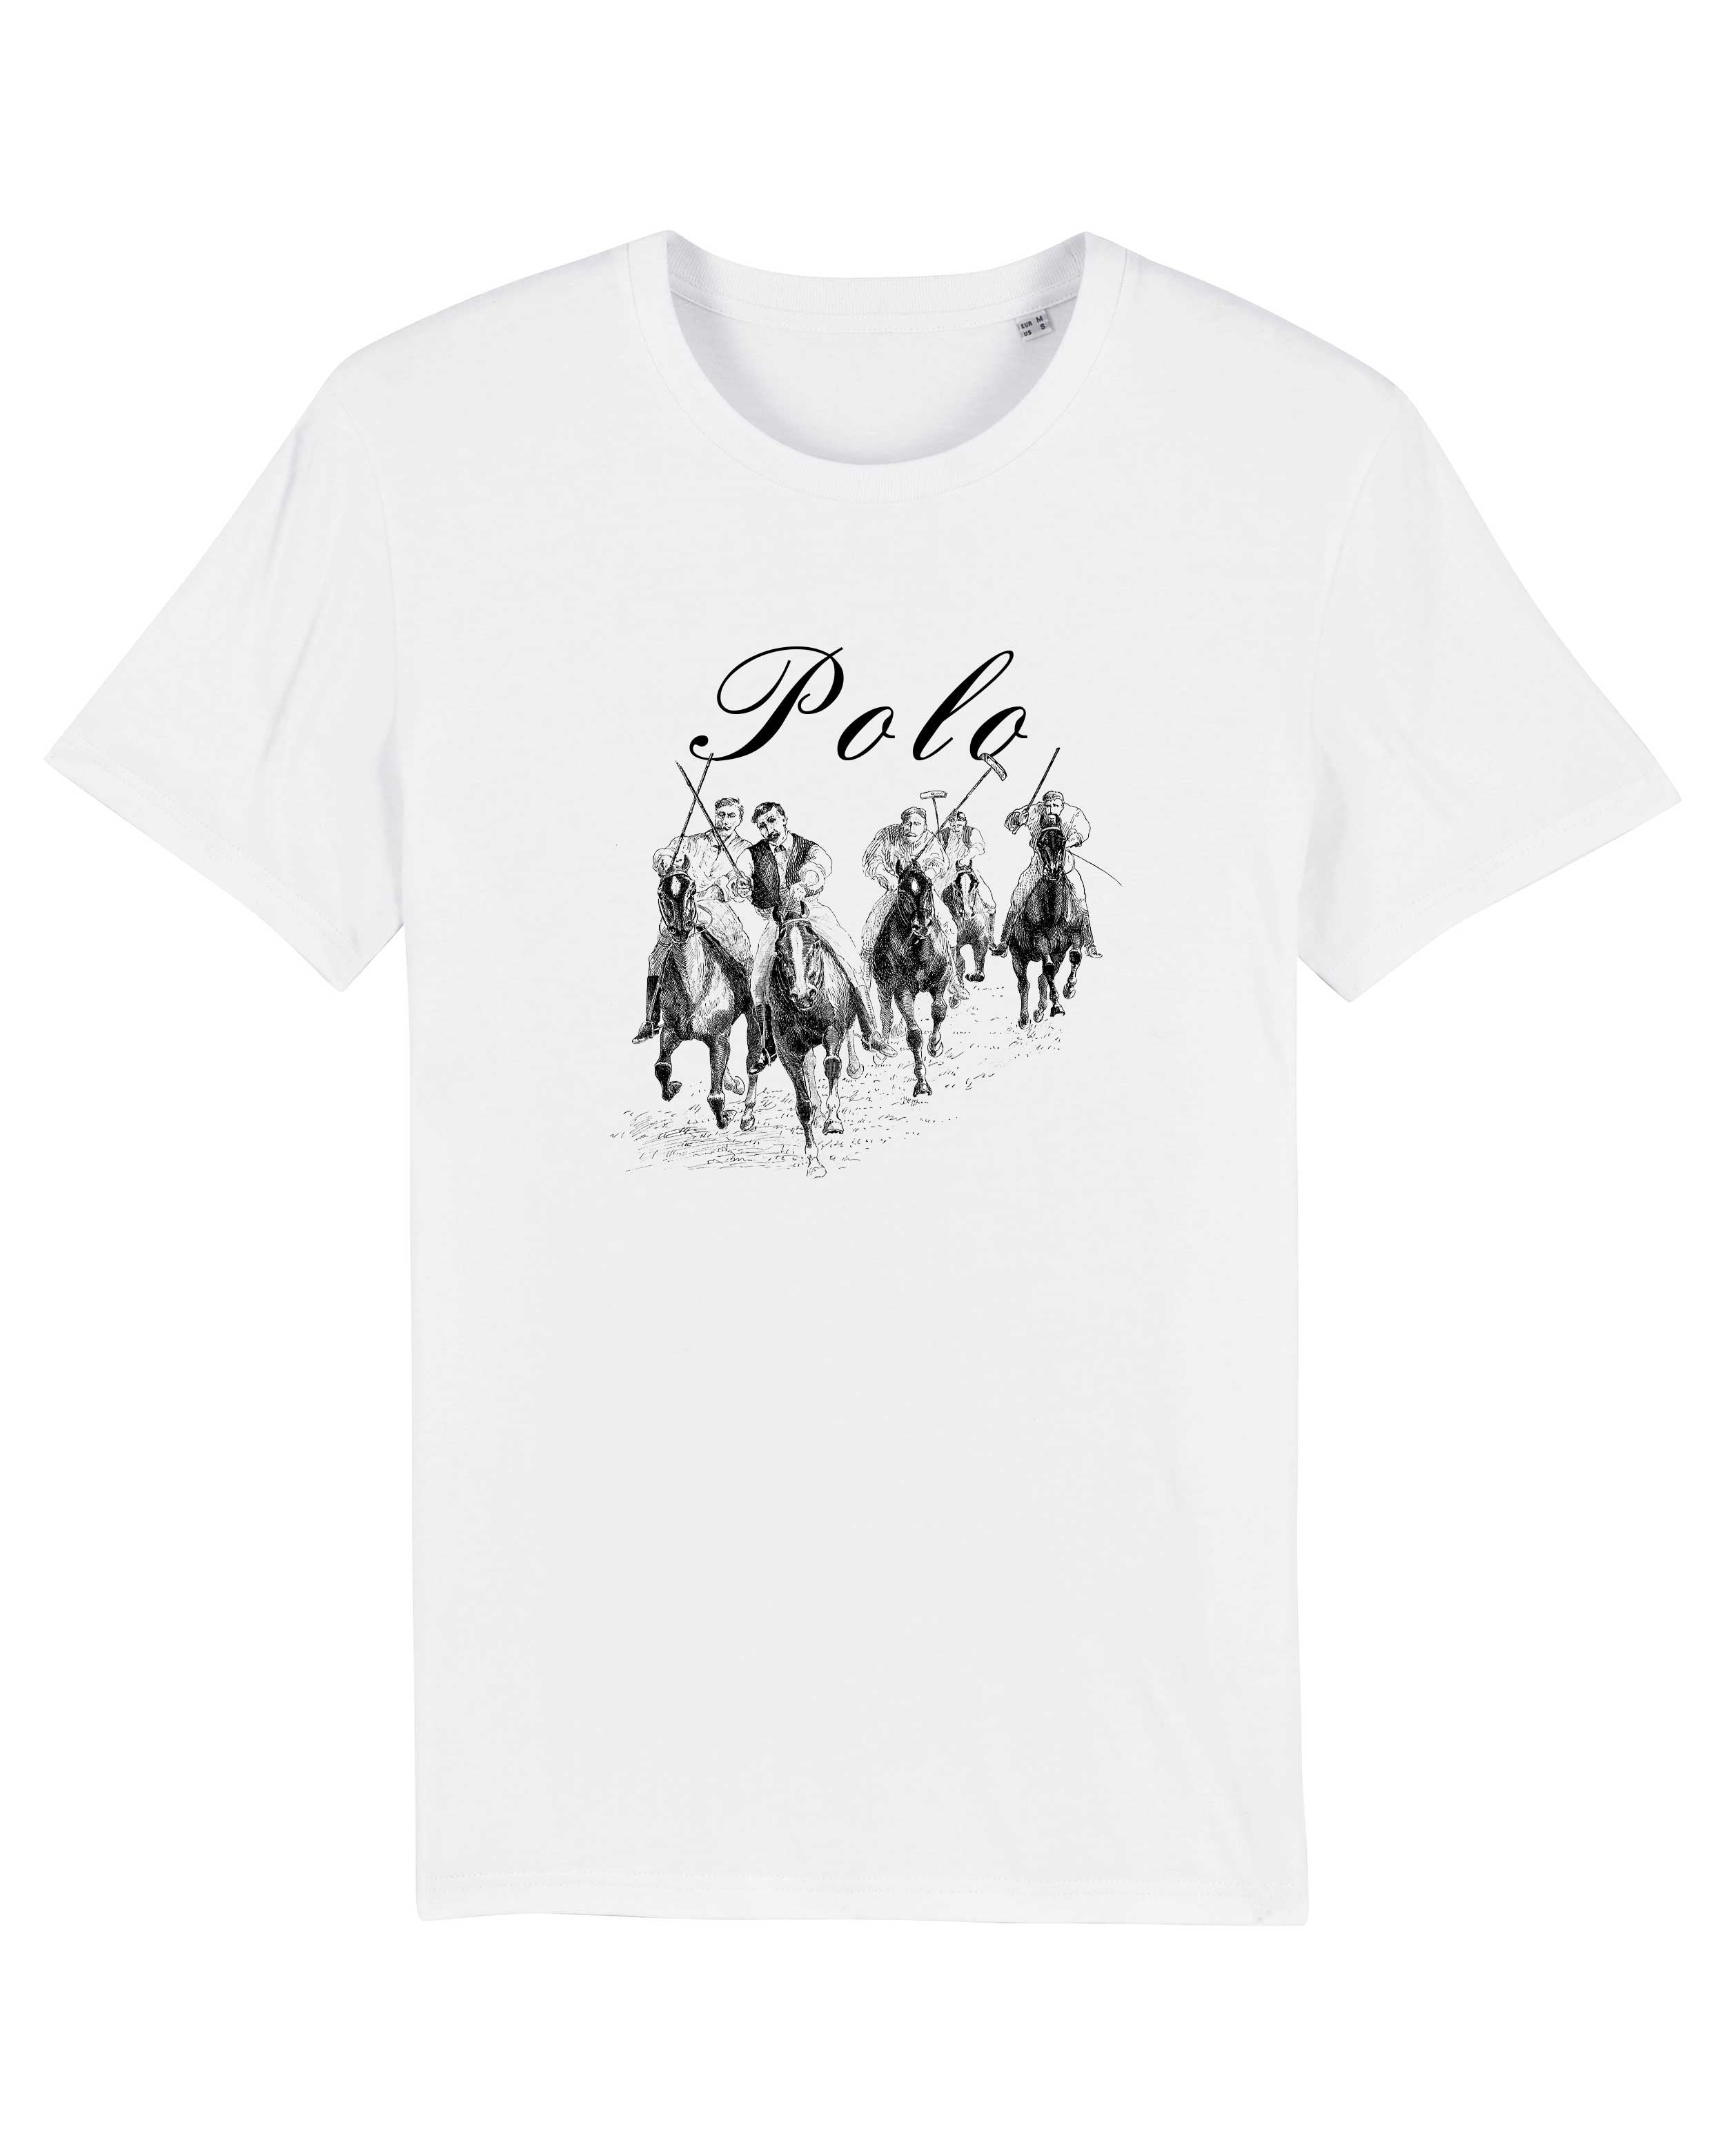 T-Shirt HIstoric Polo Pferd, Bio-Baumwolle, Unisex, Damen, Kids